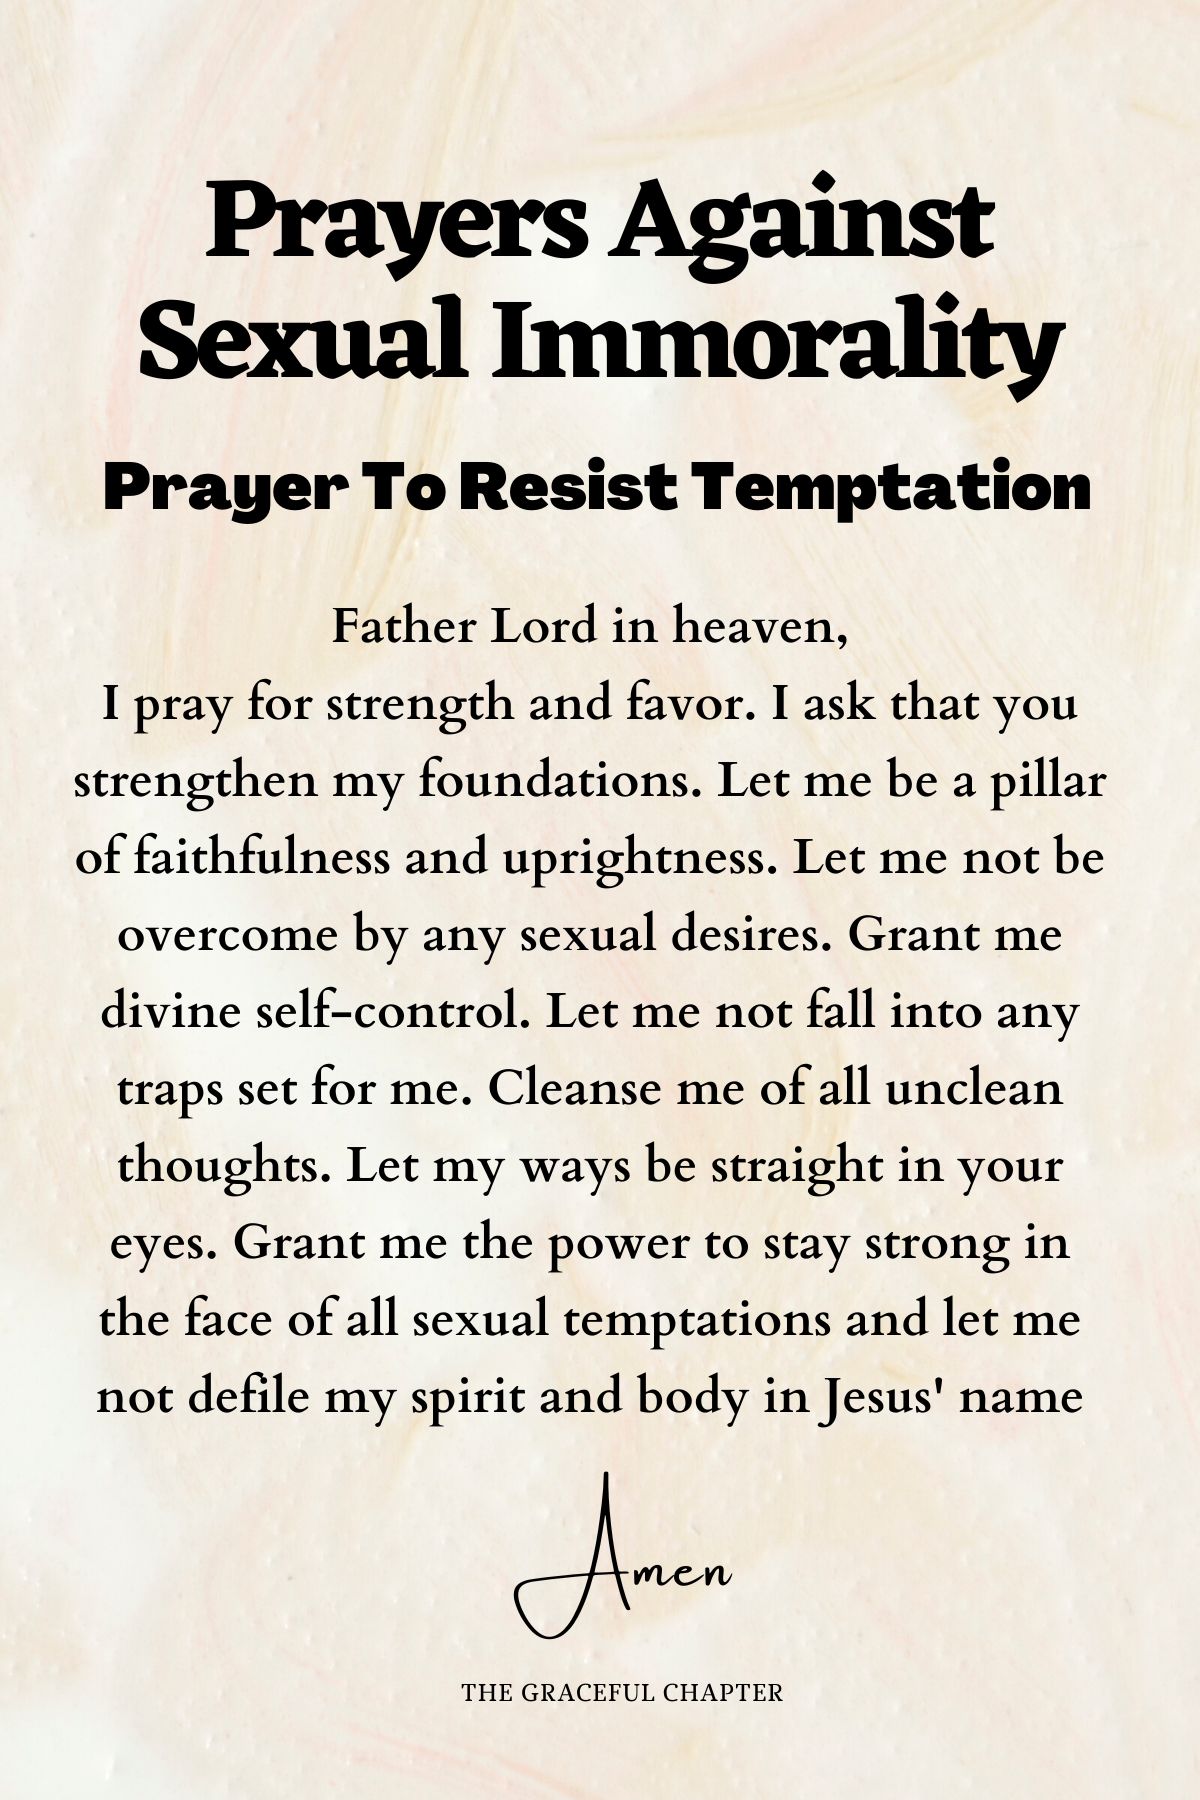 Prayer to resist temptation